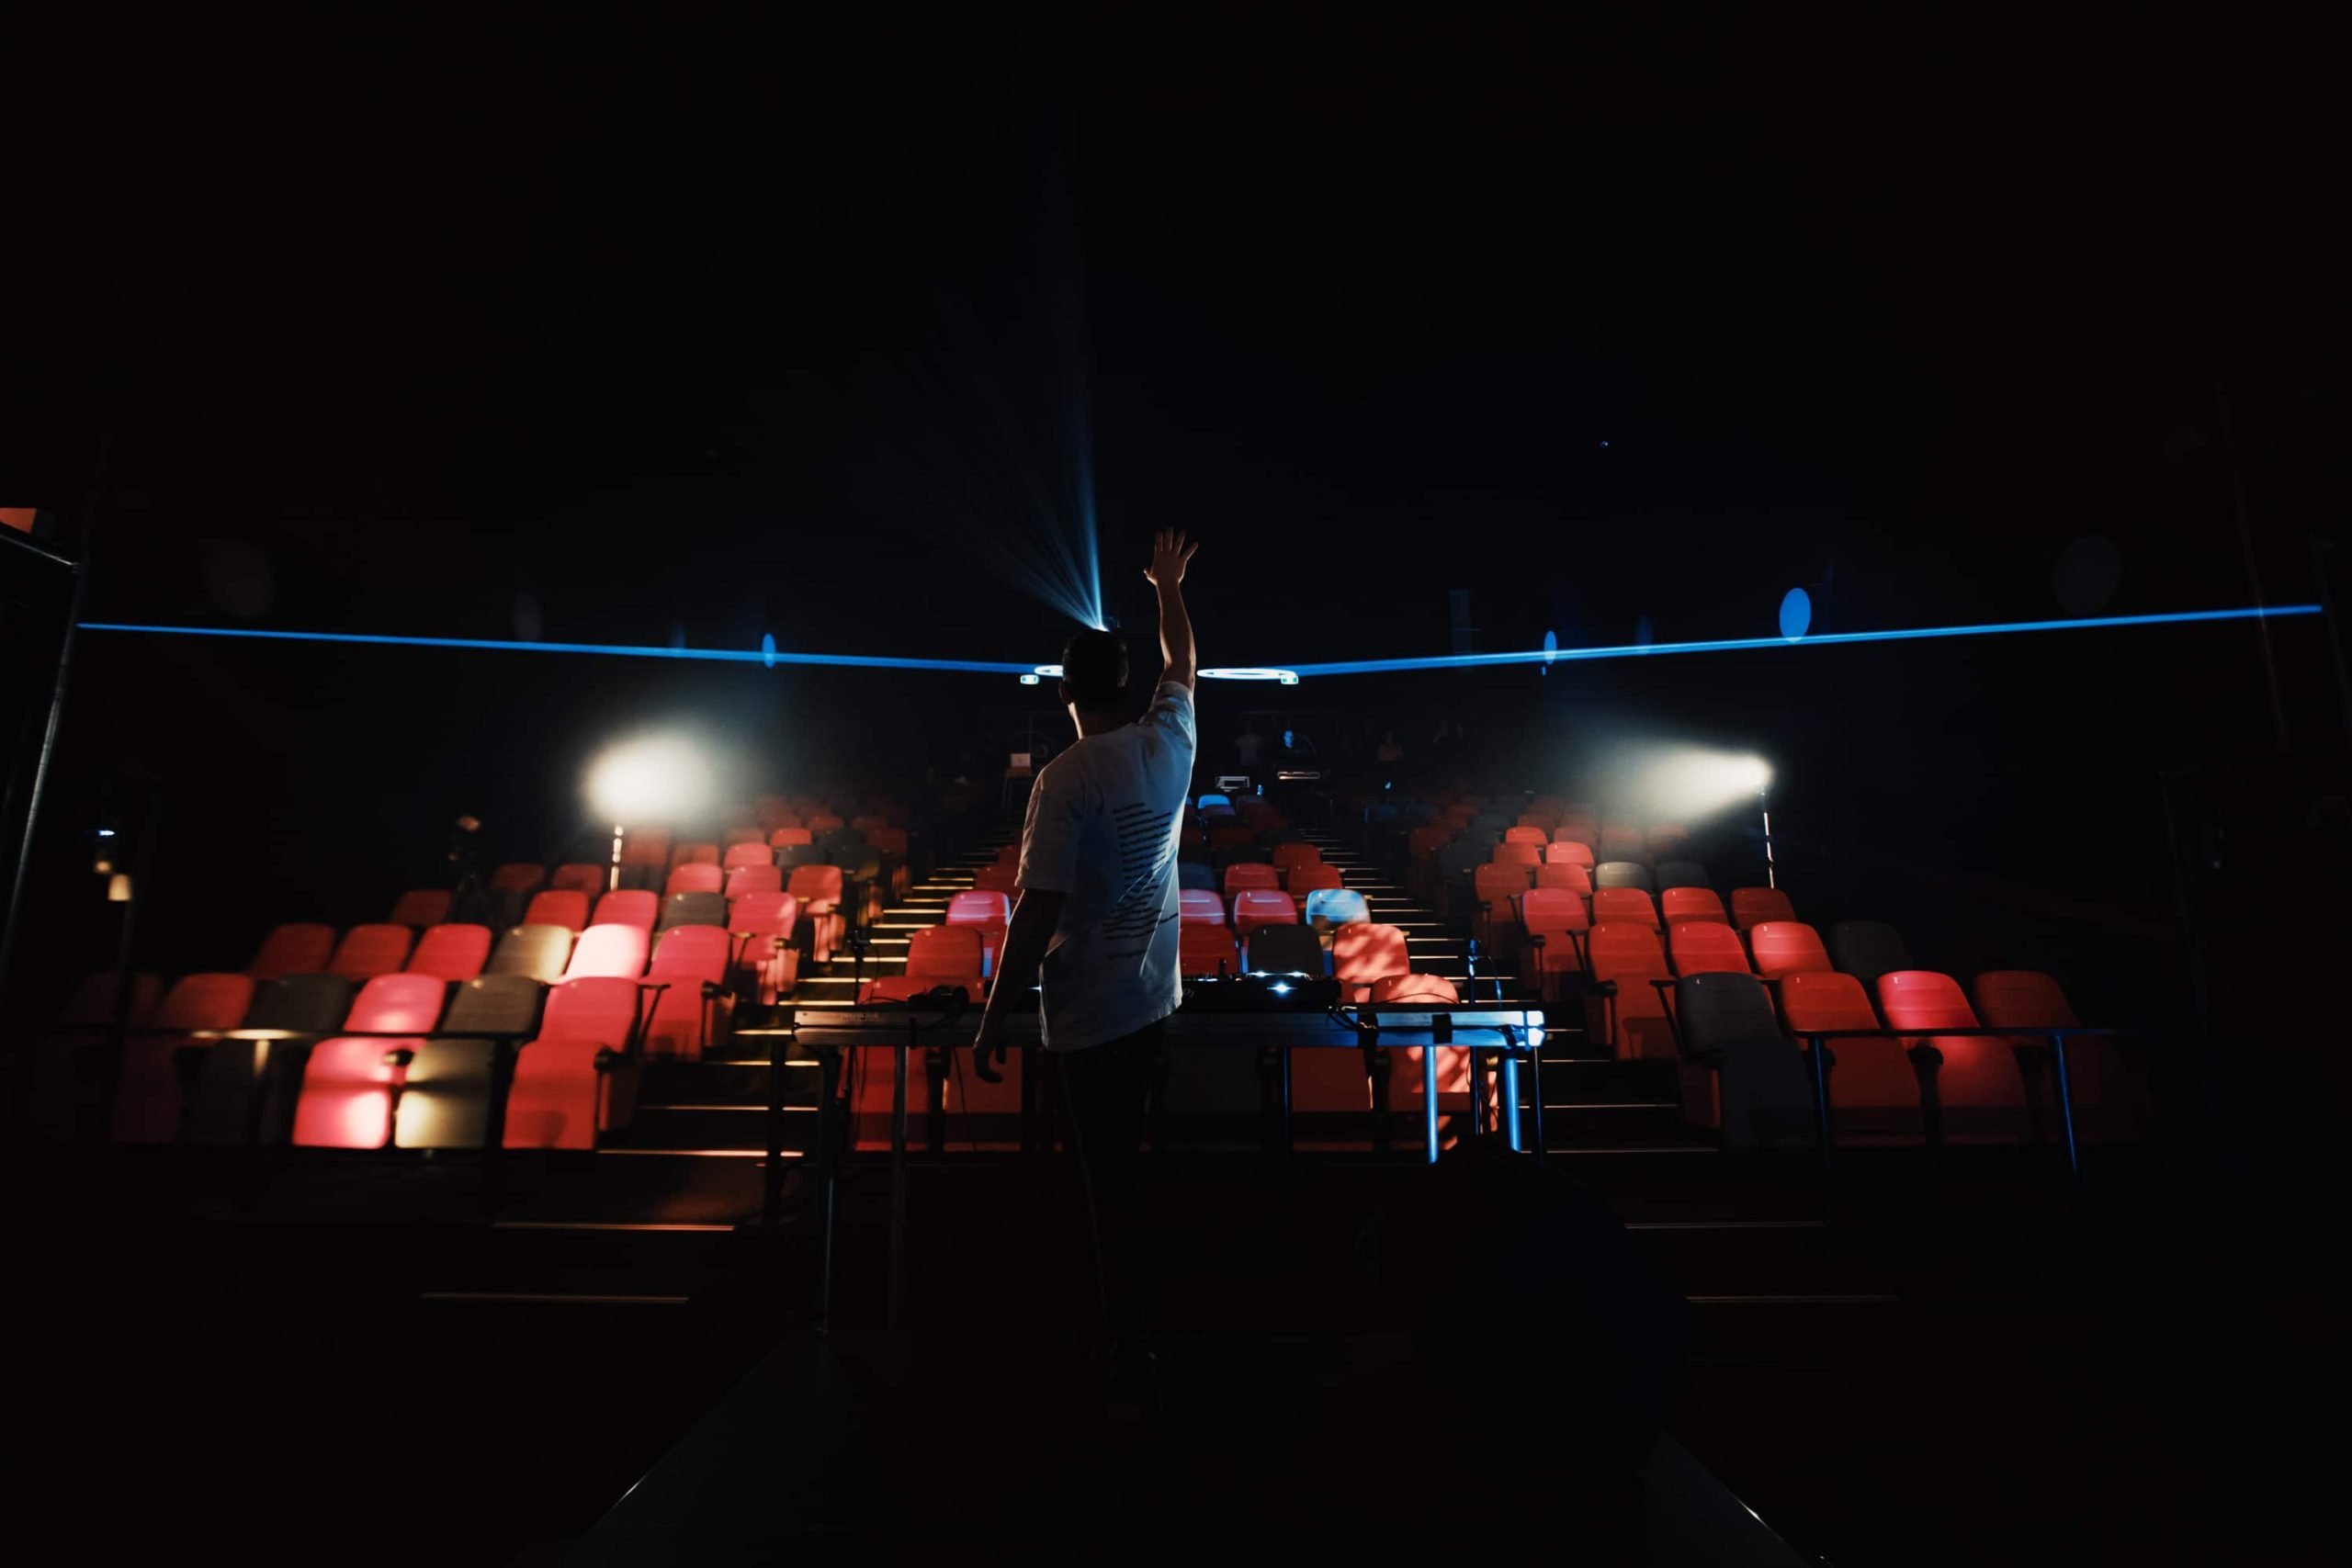 Feron delivers an exquisite live set at a cinema hall